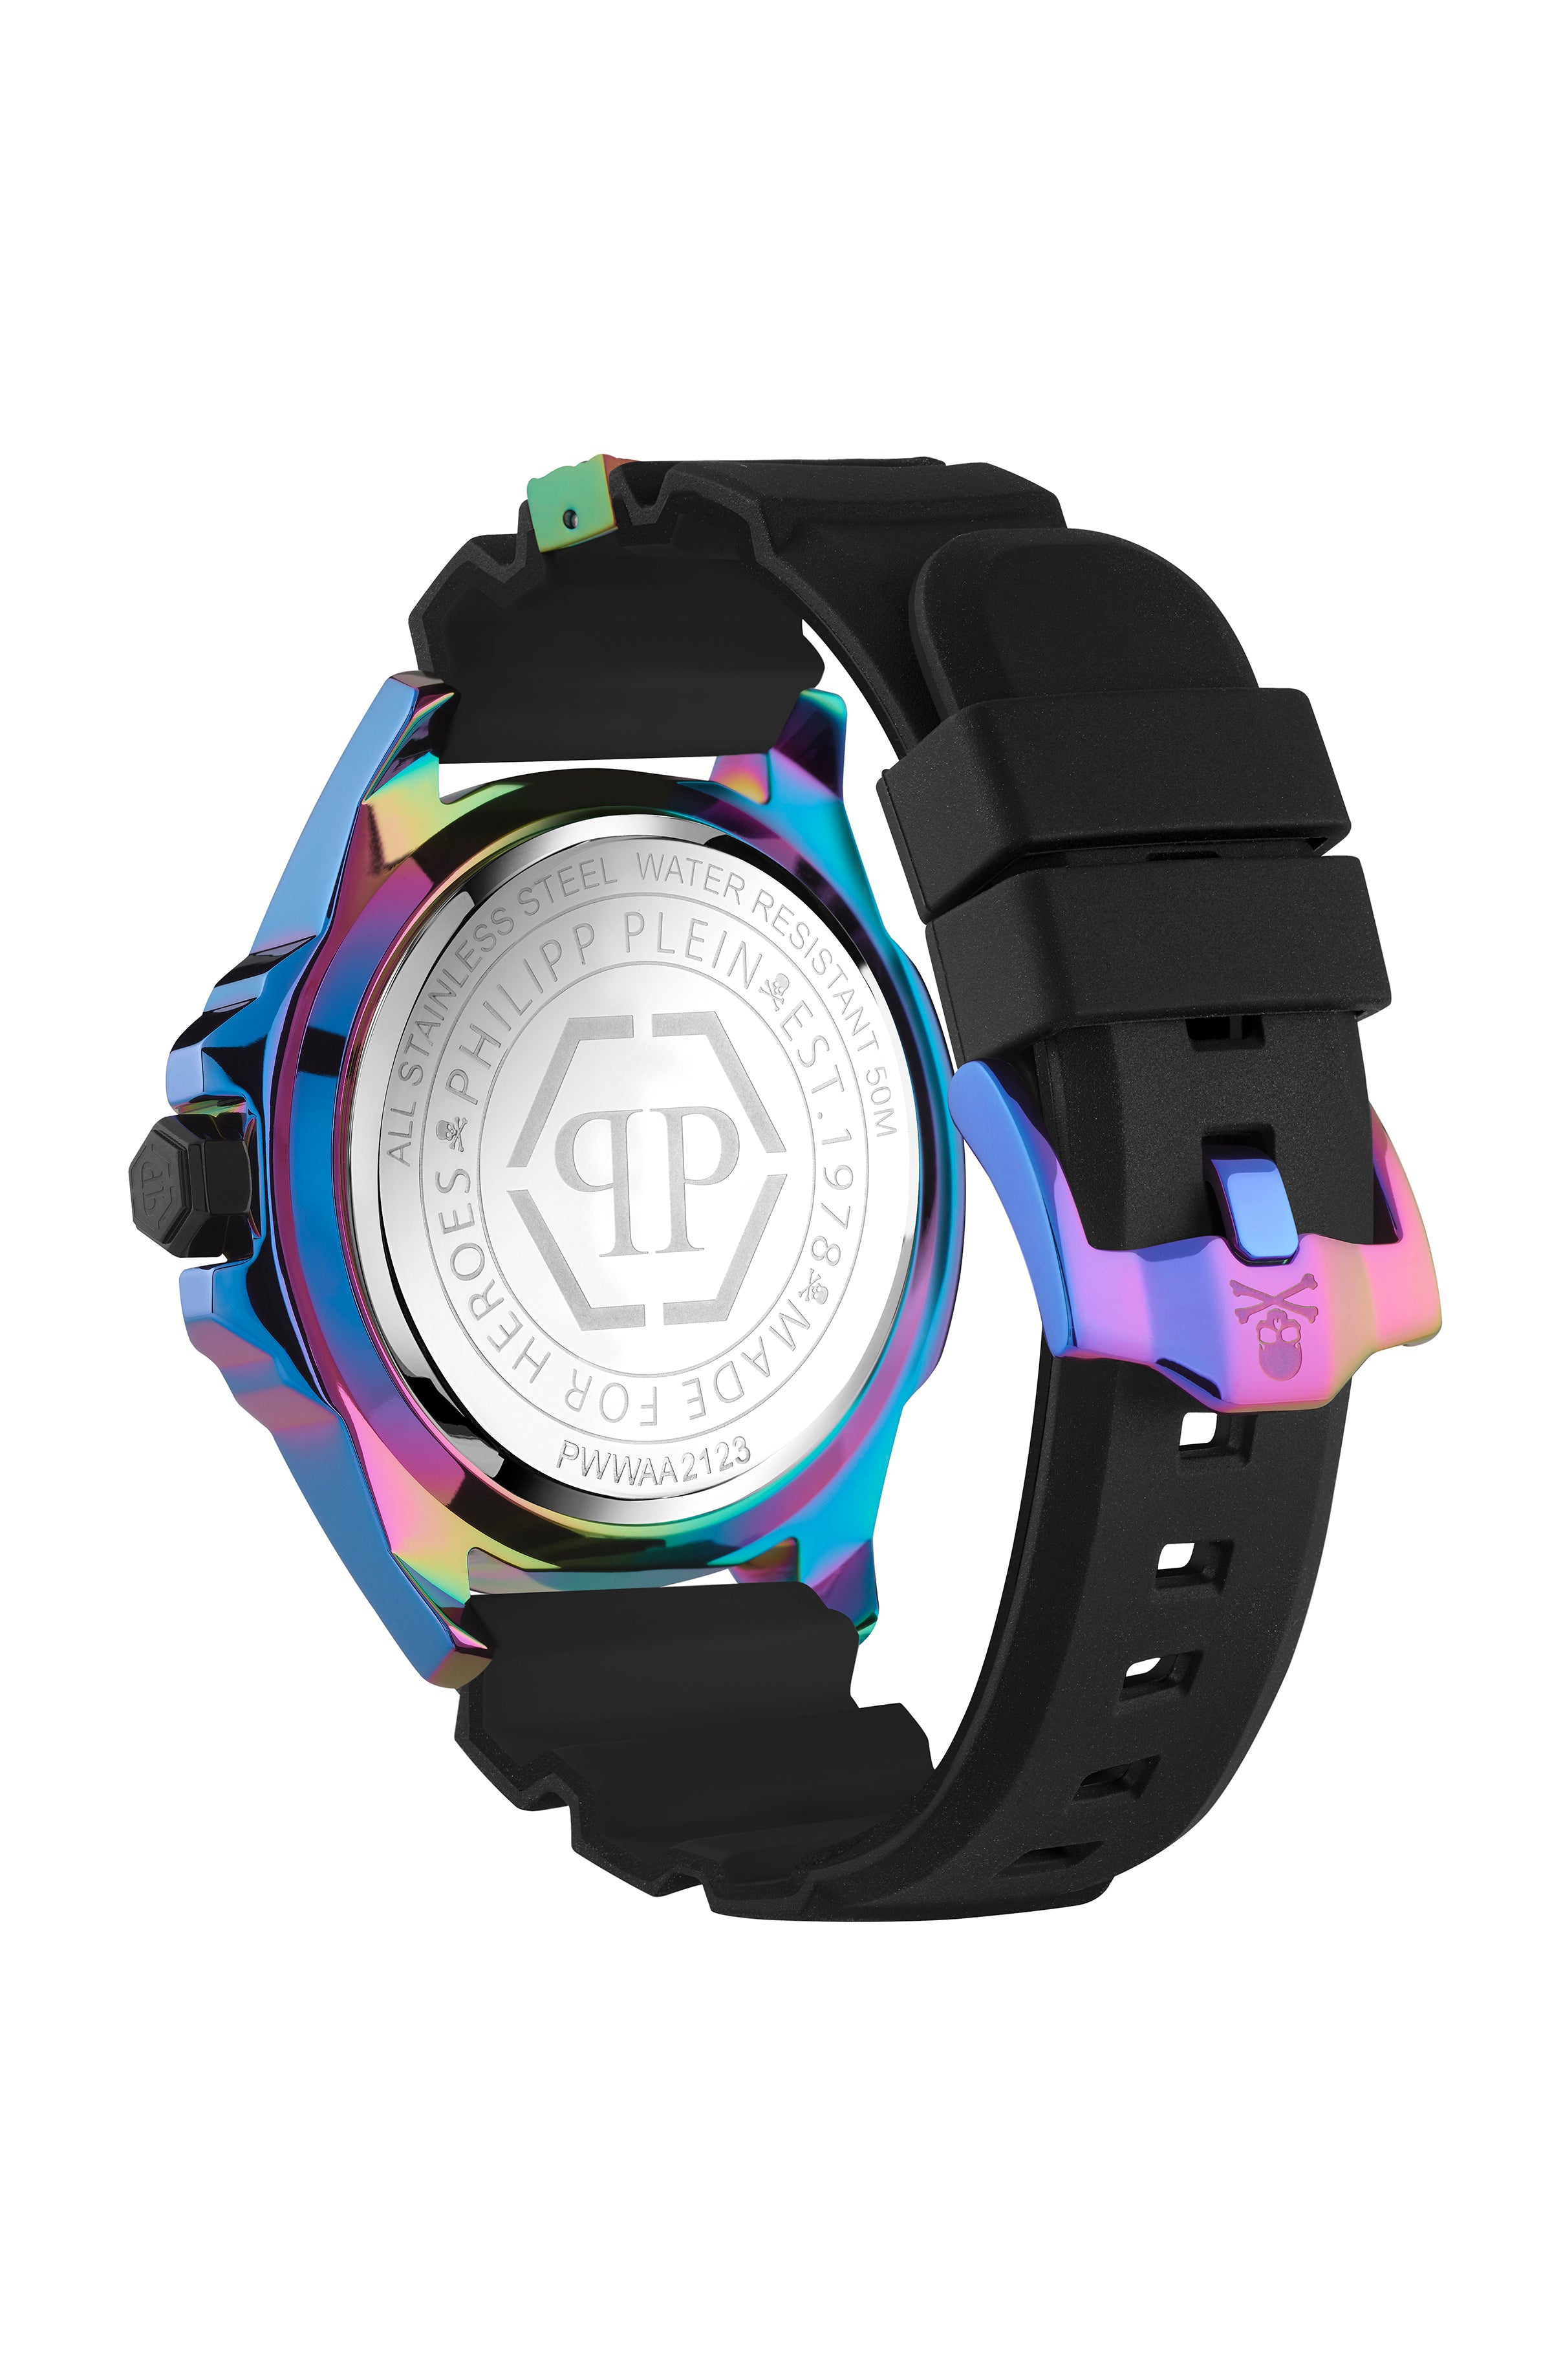 The $kull Rainbow Silicone Watch